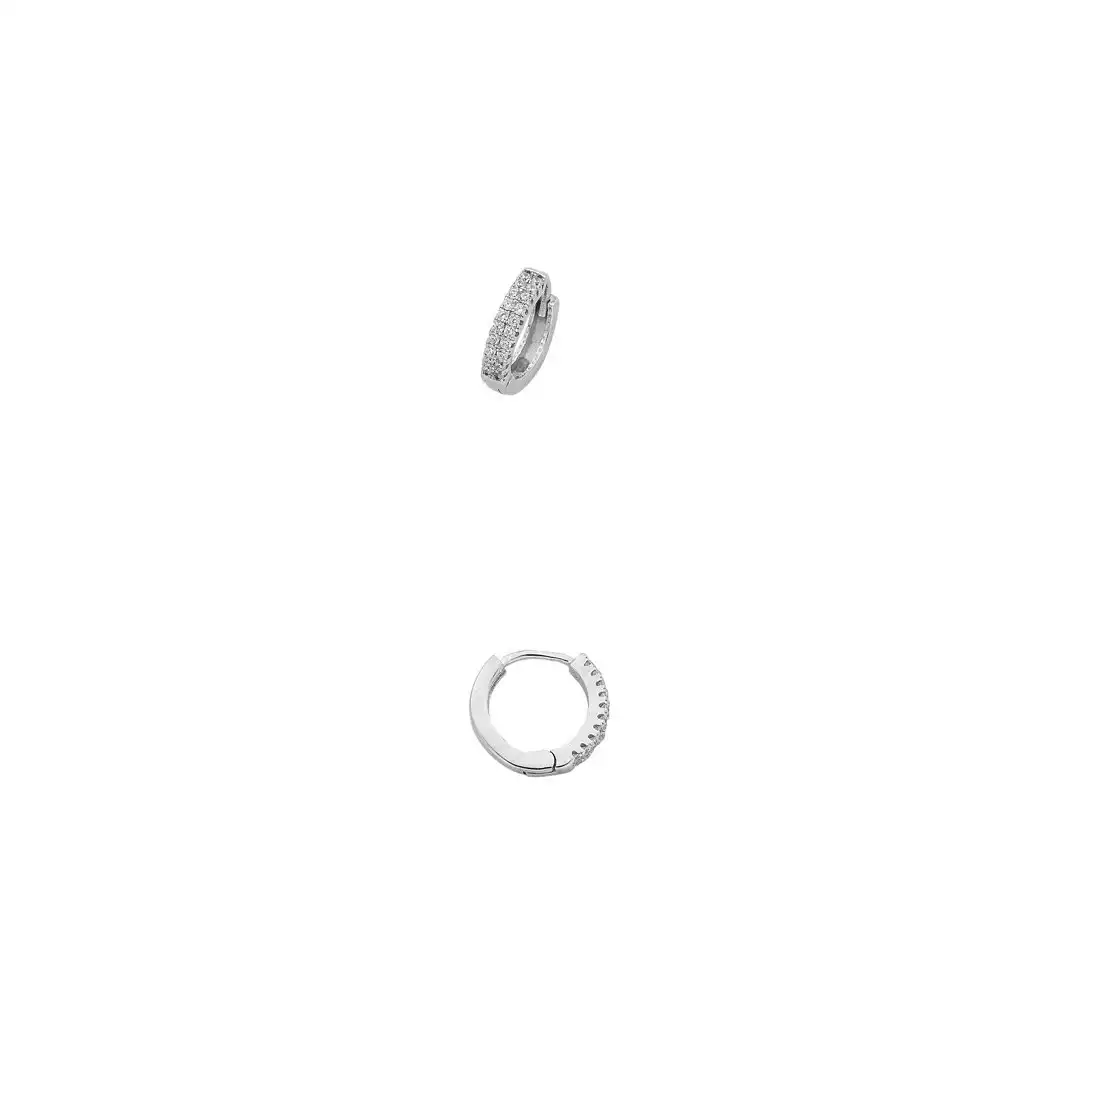 13mm Sterling Silver Cubic Zirconia Double Row Hoop Earrings